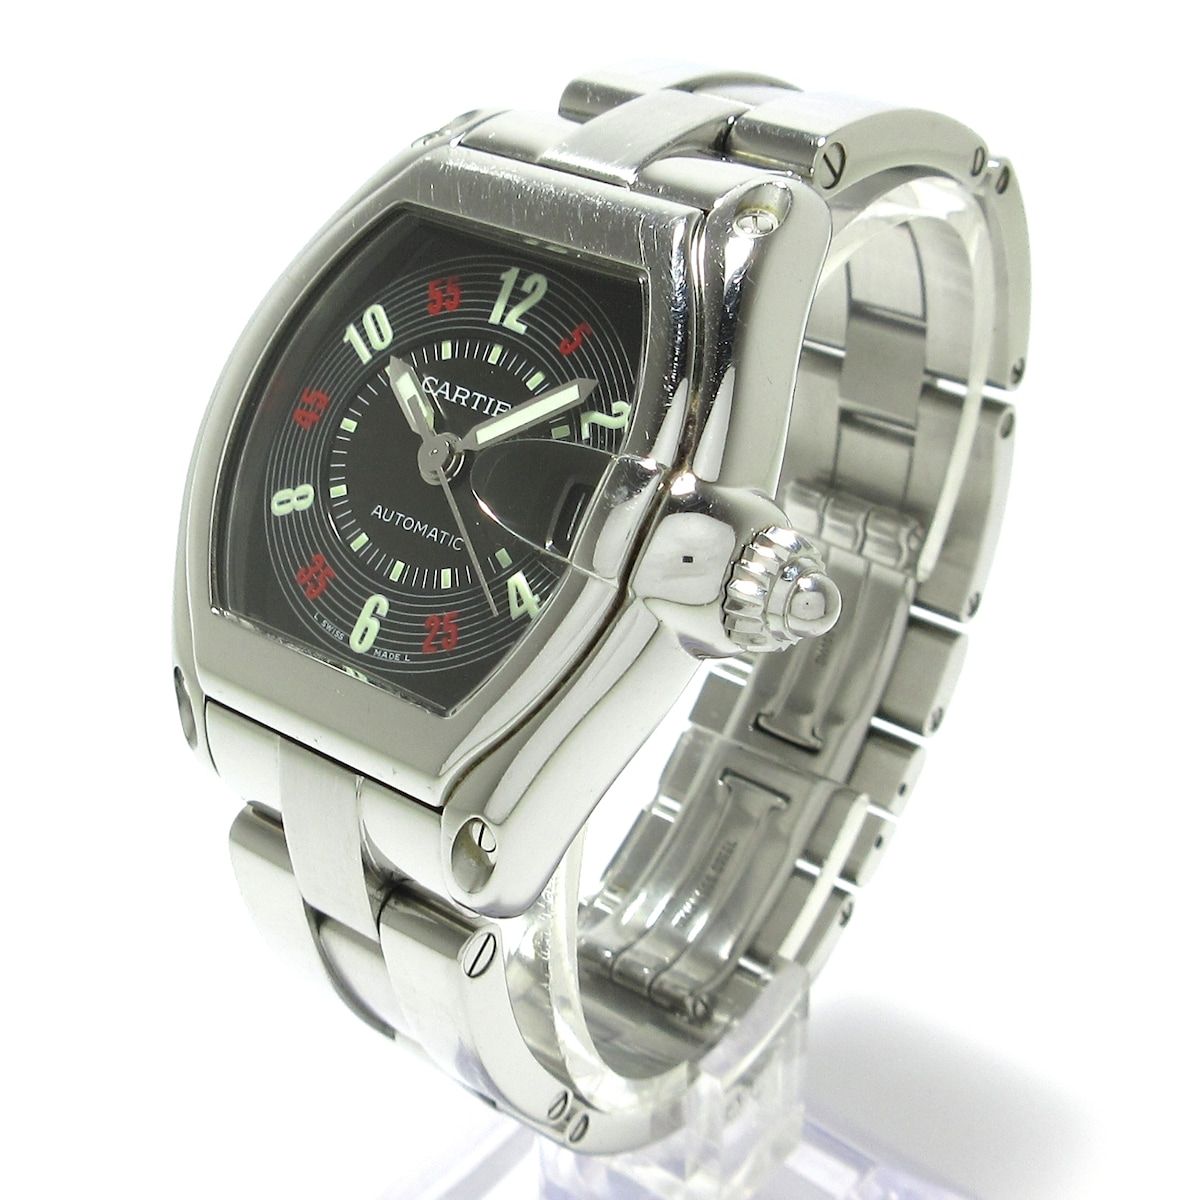 Cartier(カルティエ) 腕時計 ロードスターLM W62002V3 メンズ SS 黒 - メルカリ